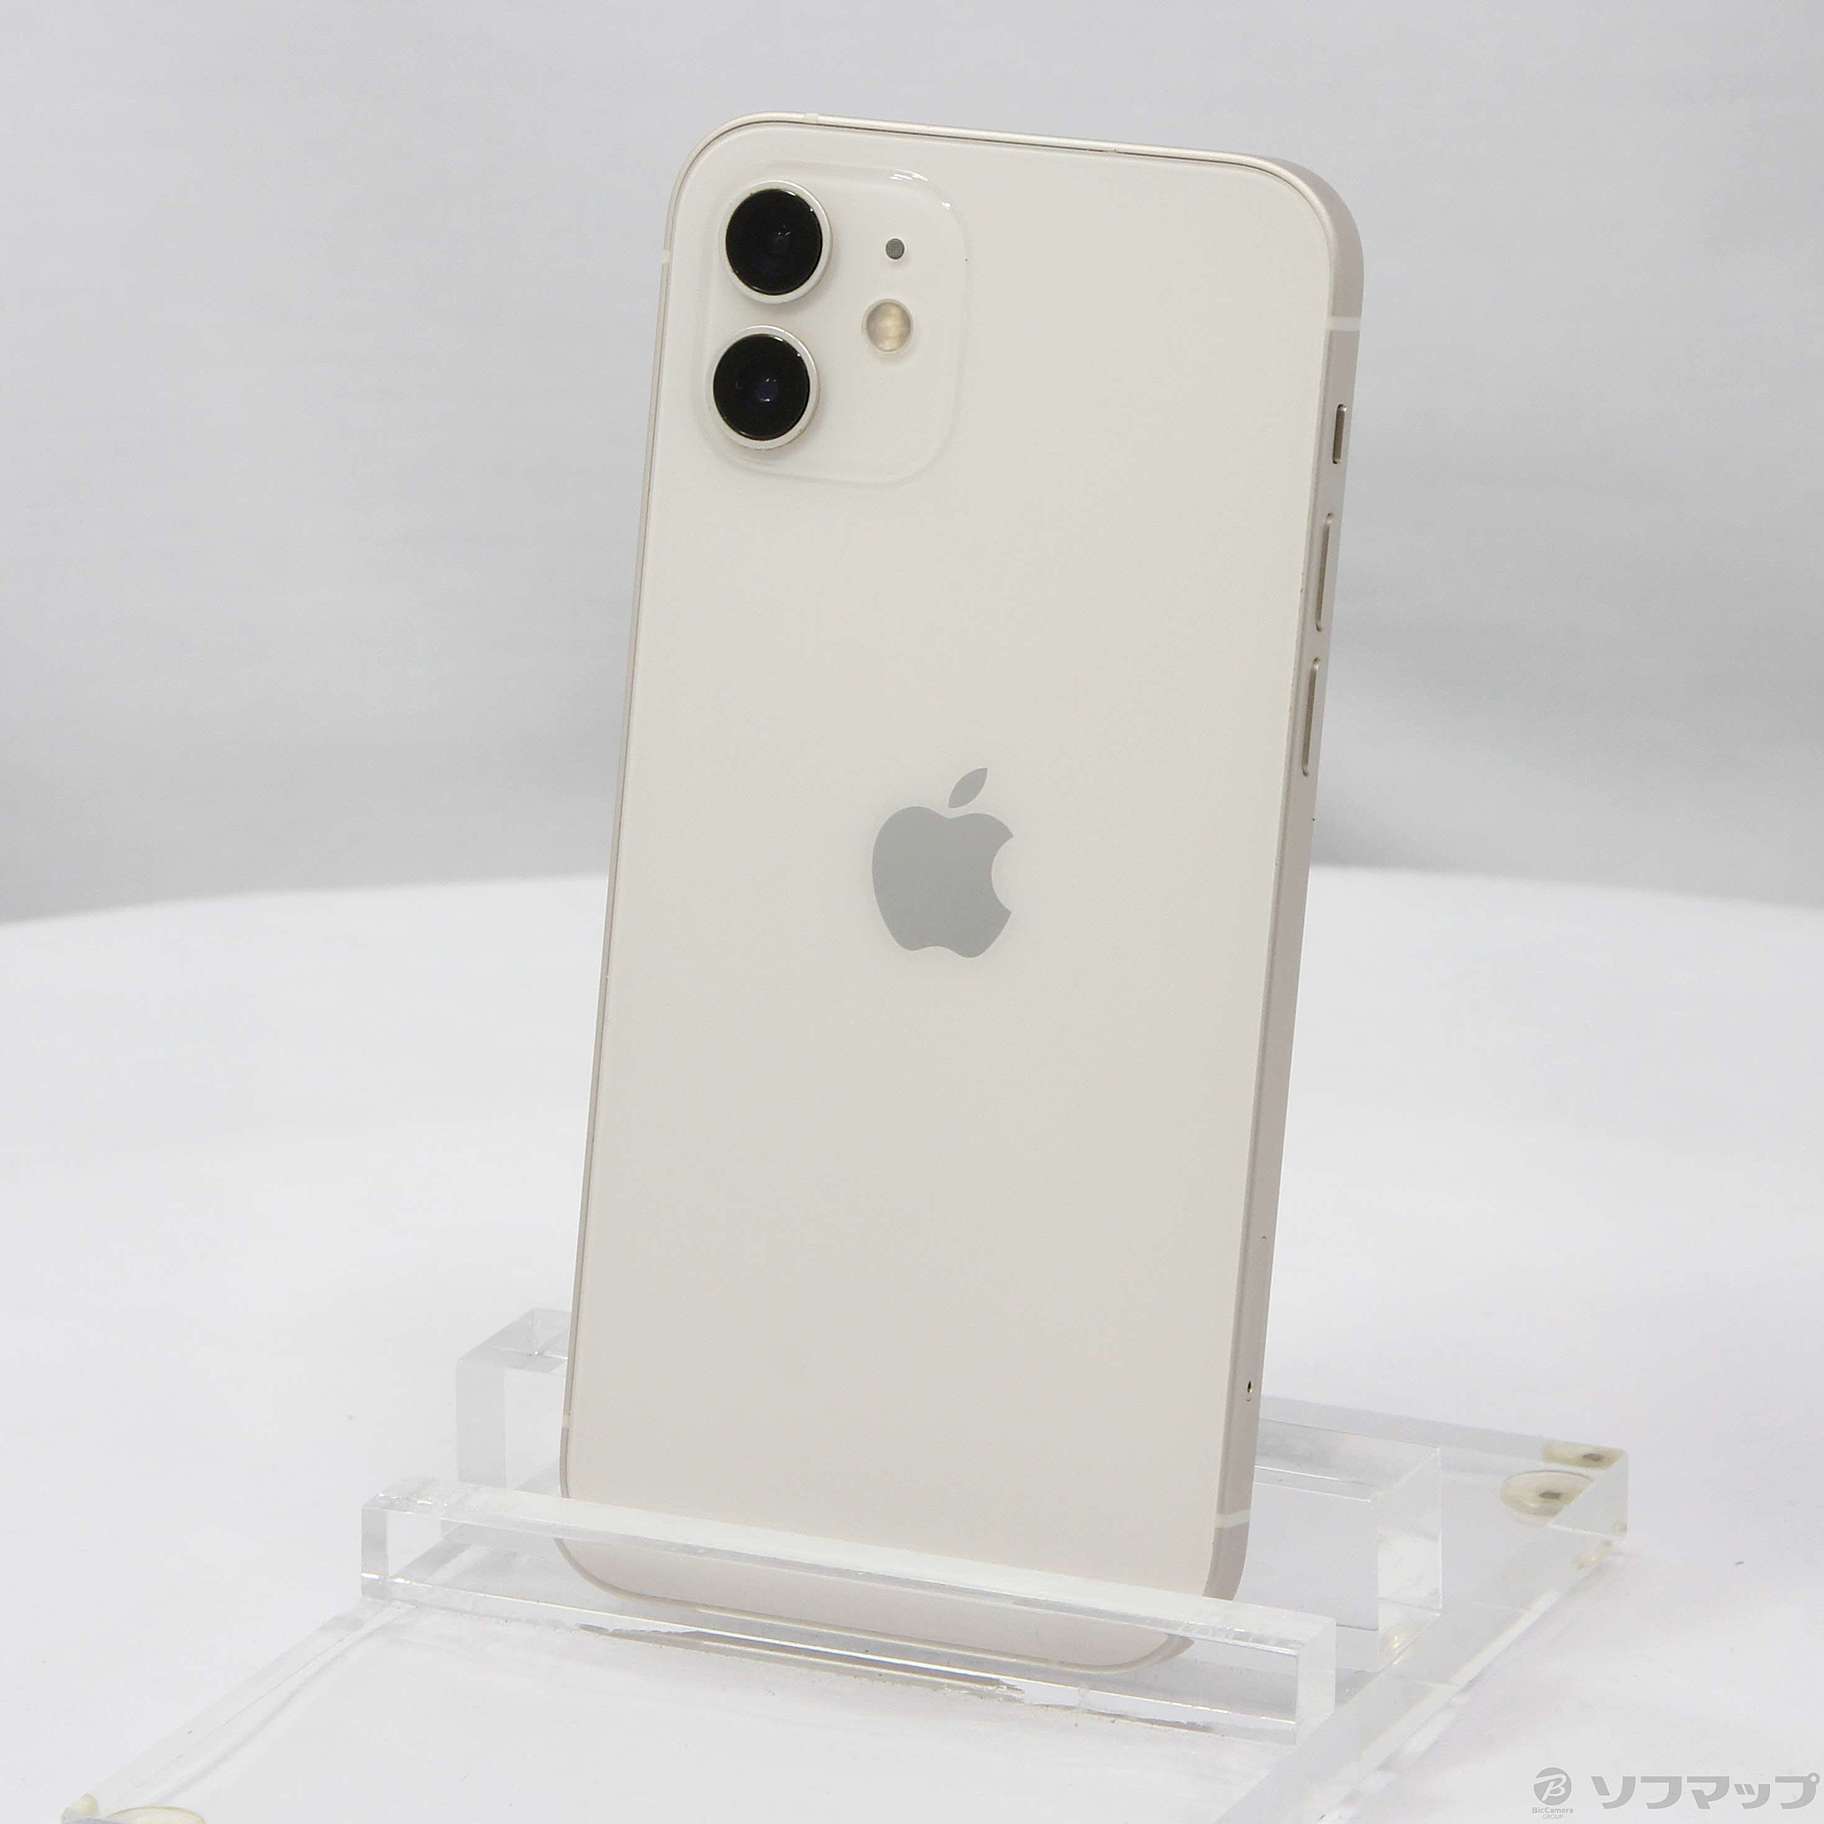 SIMフリー】アップル iPhone12 64GB ホワイト シムフリースマホ家電カメラ - スマートフォン本体